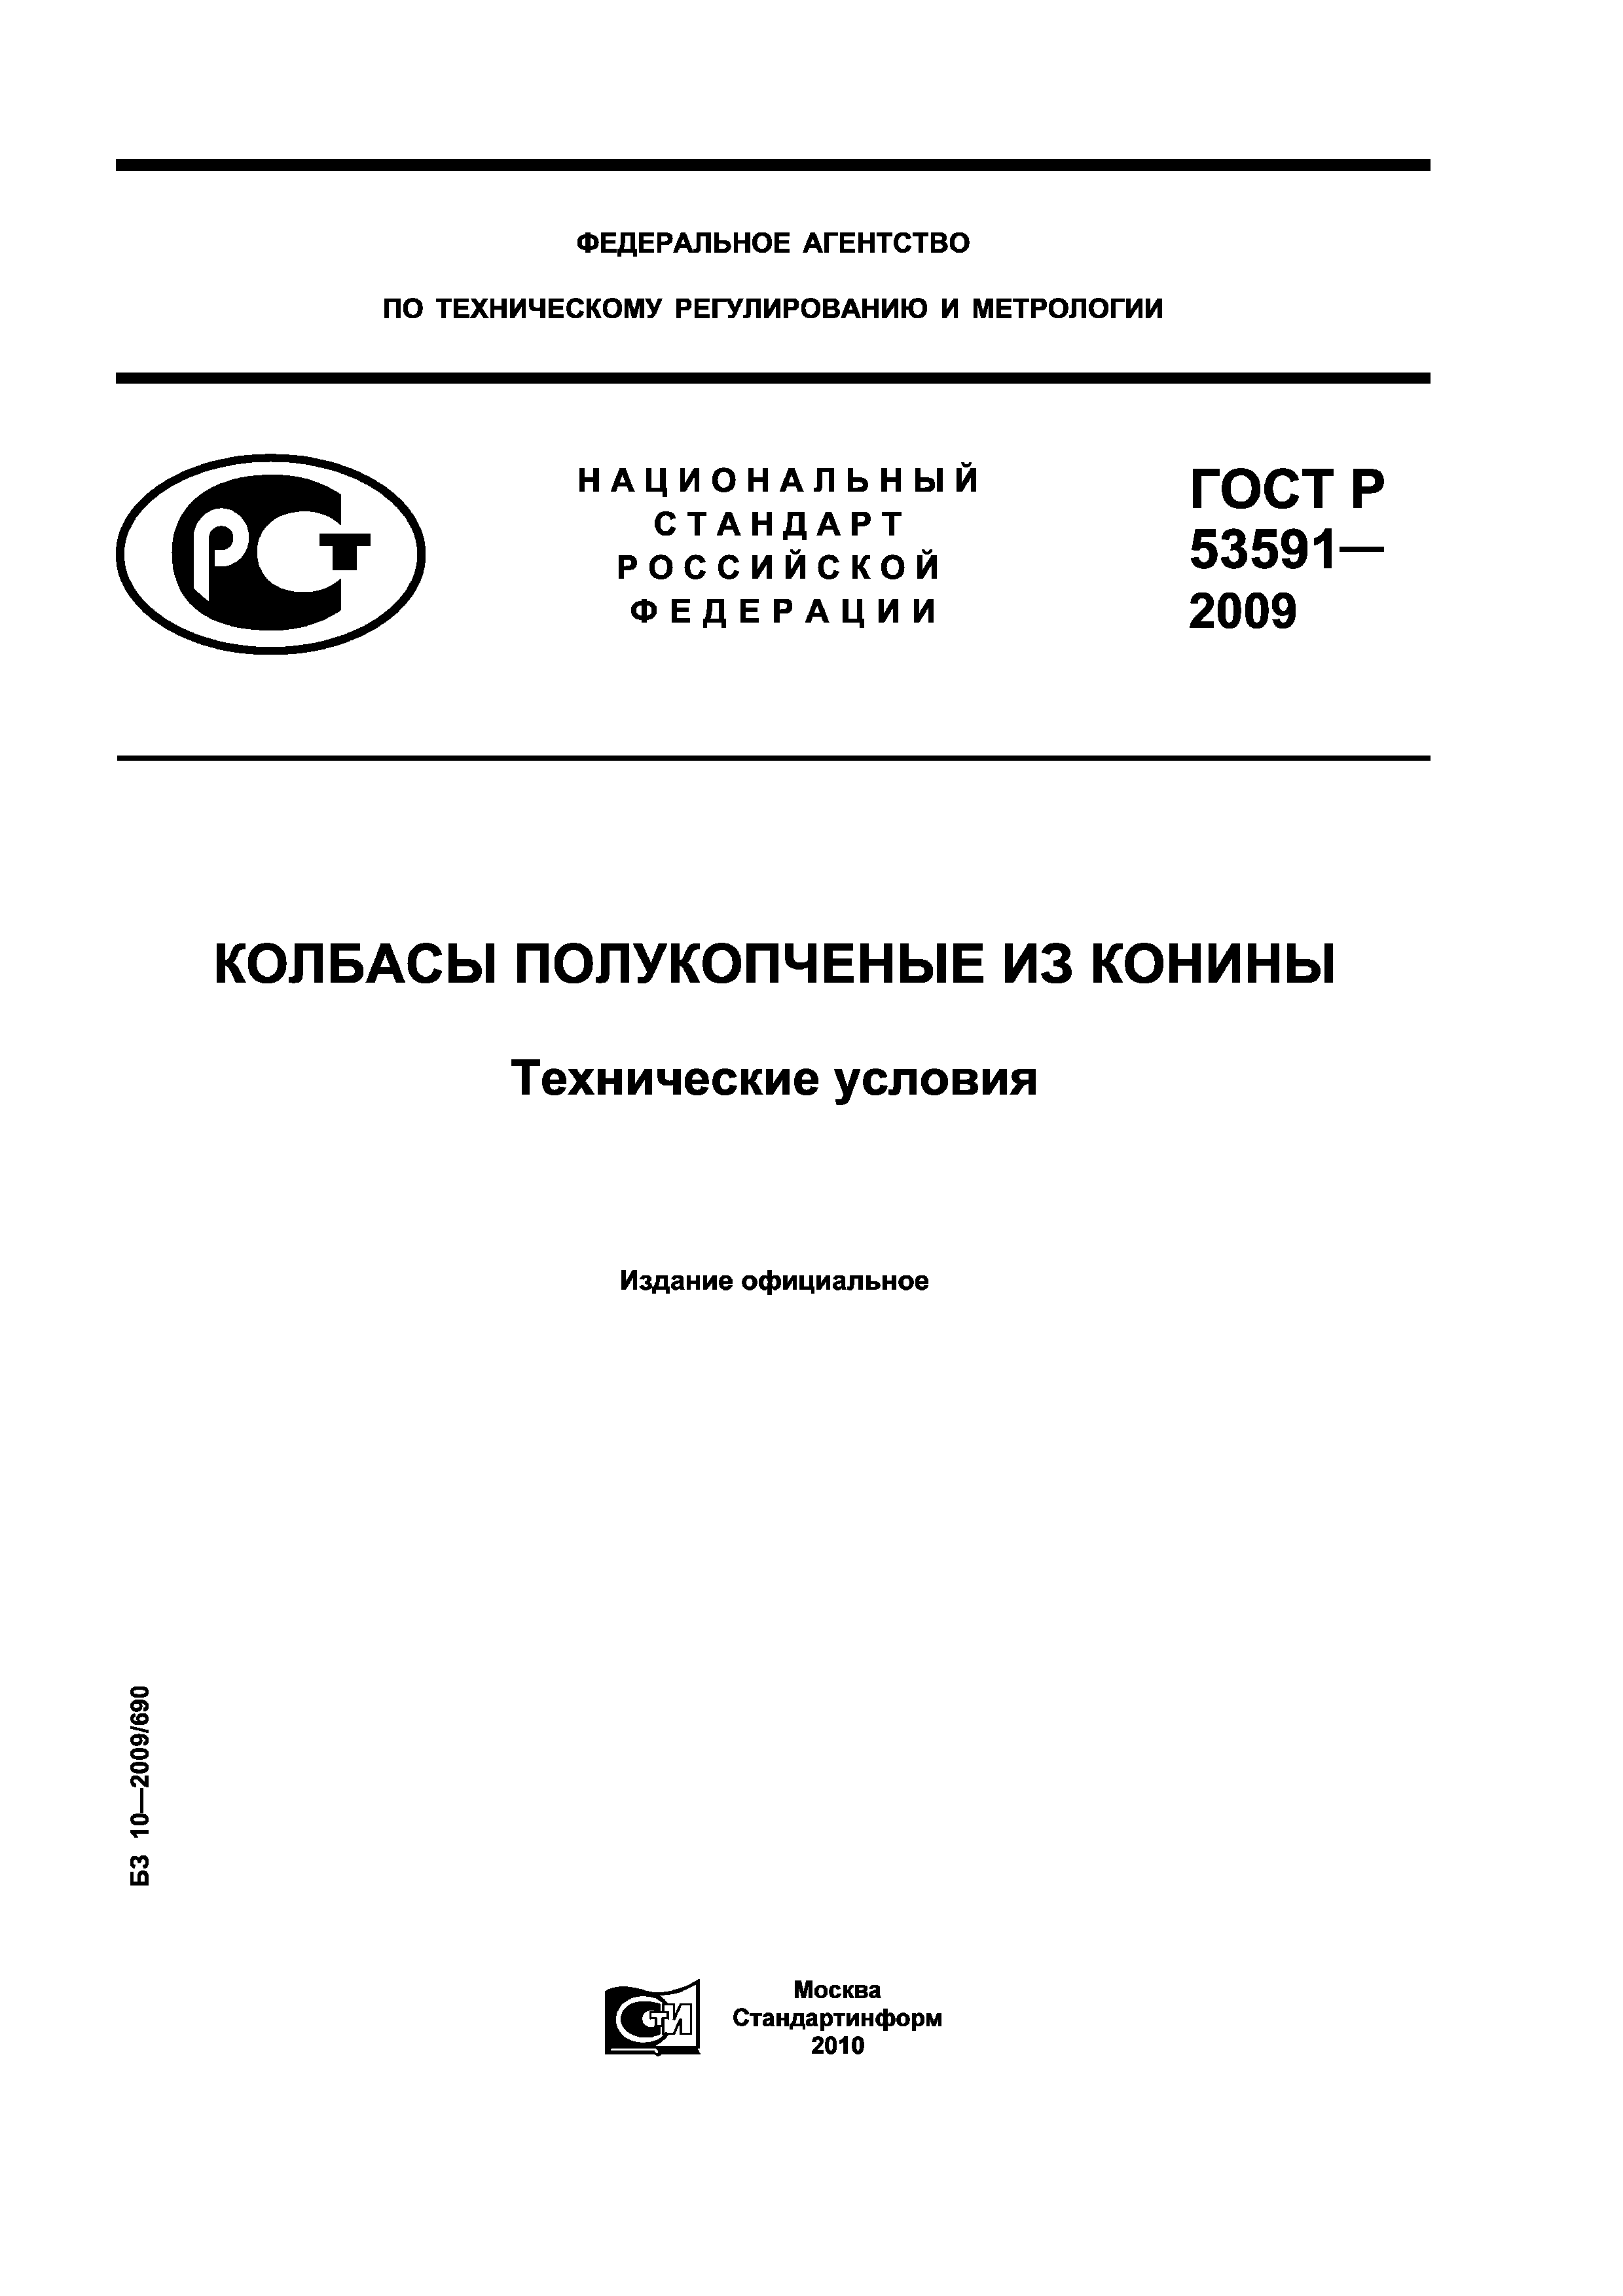 ГОСТ Р 53591-2009